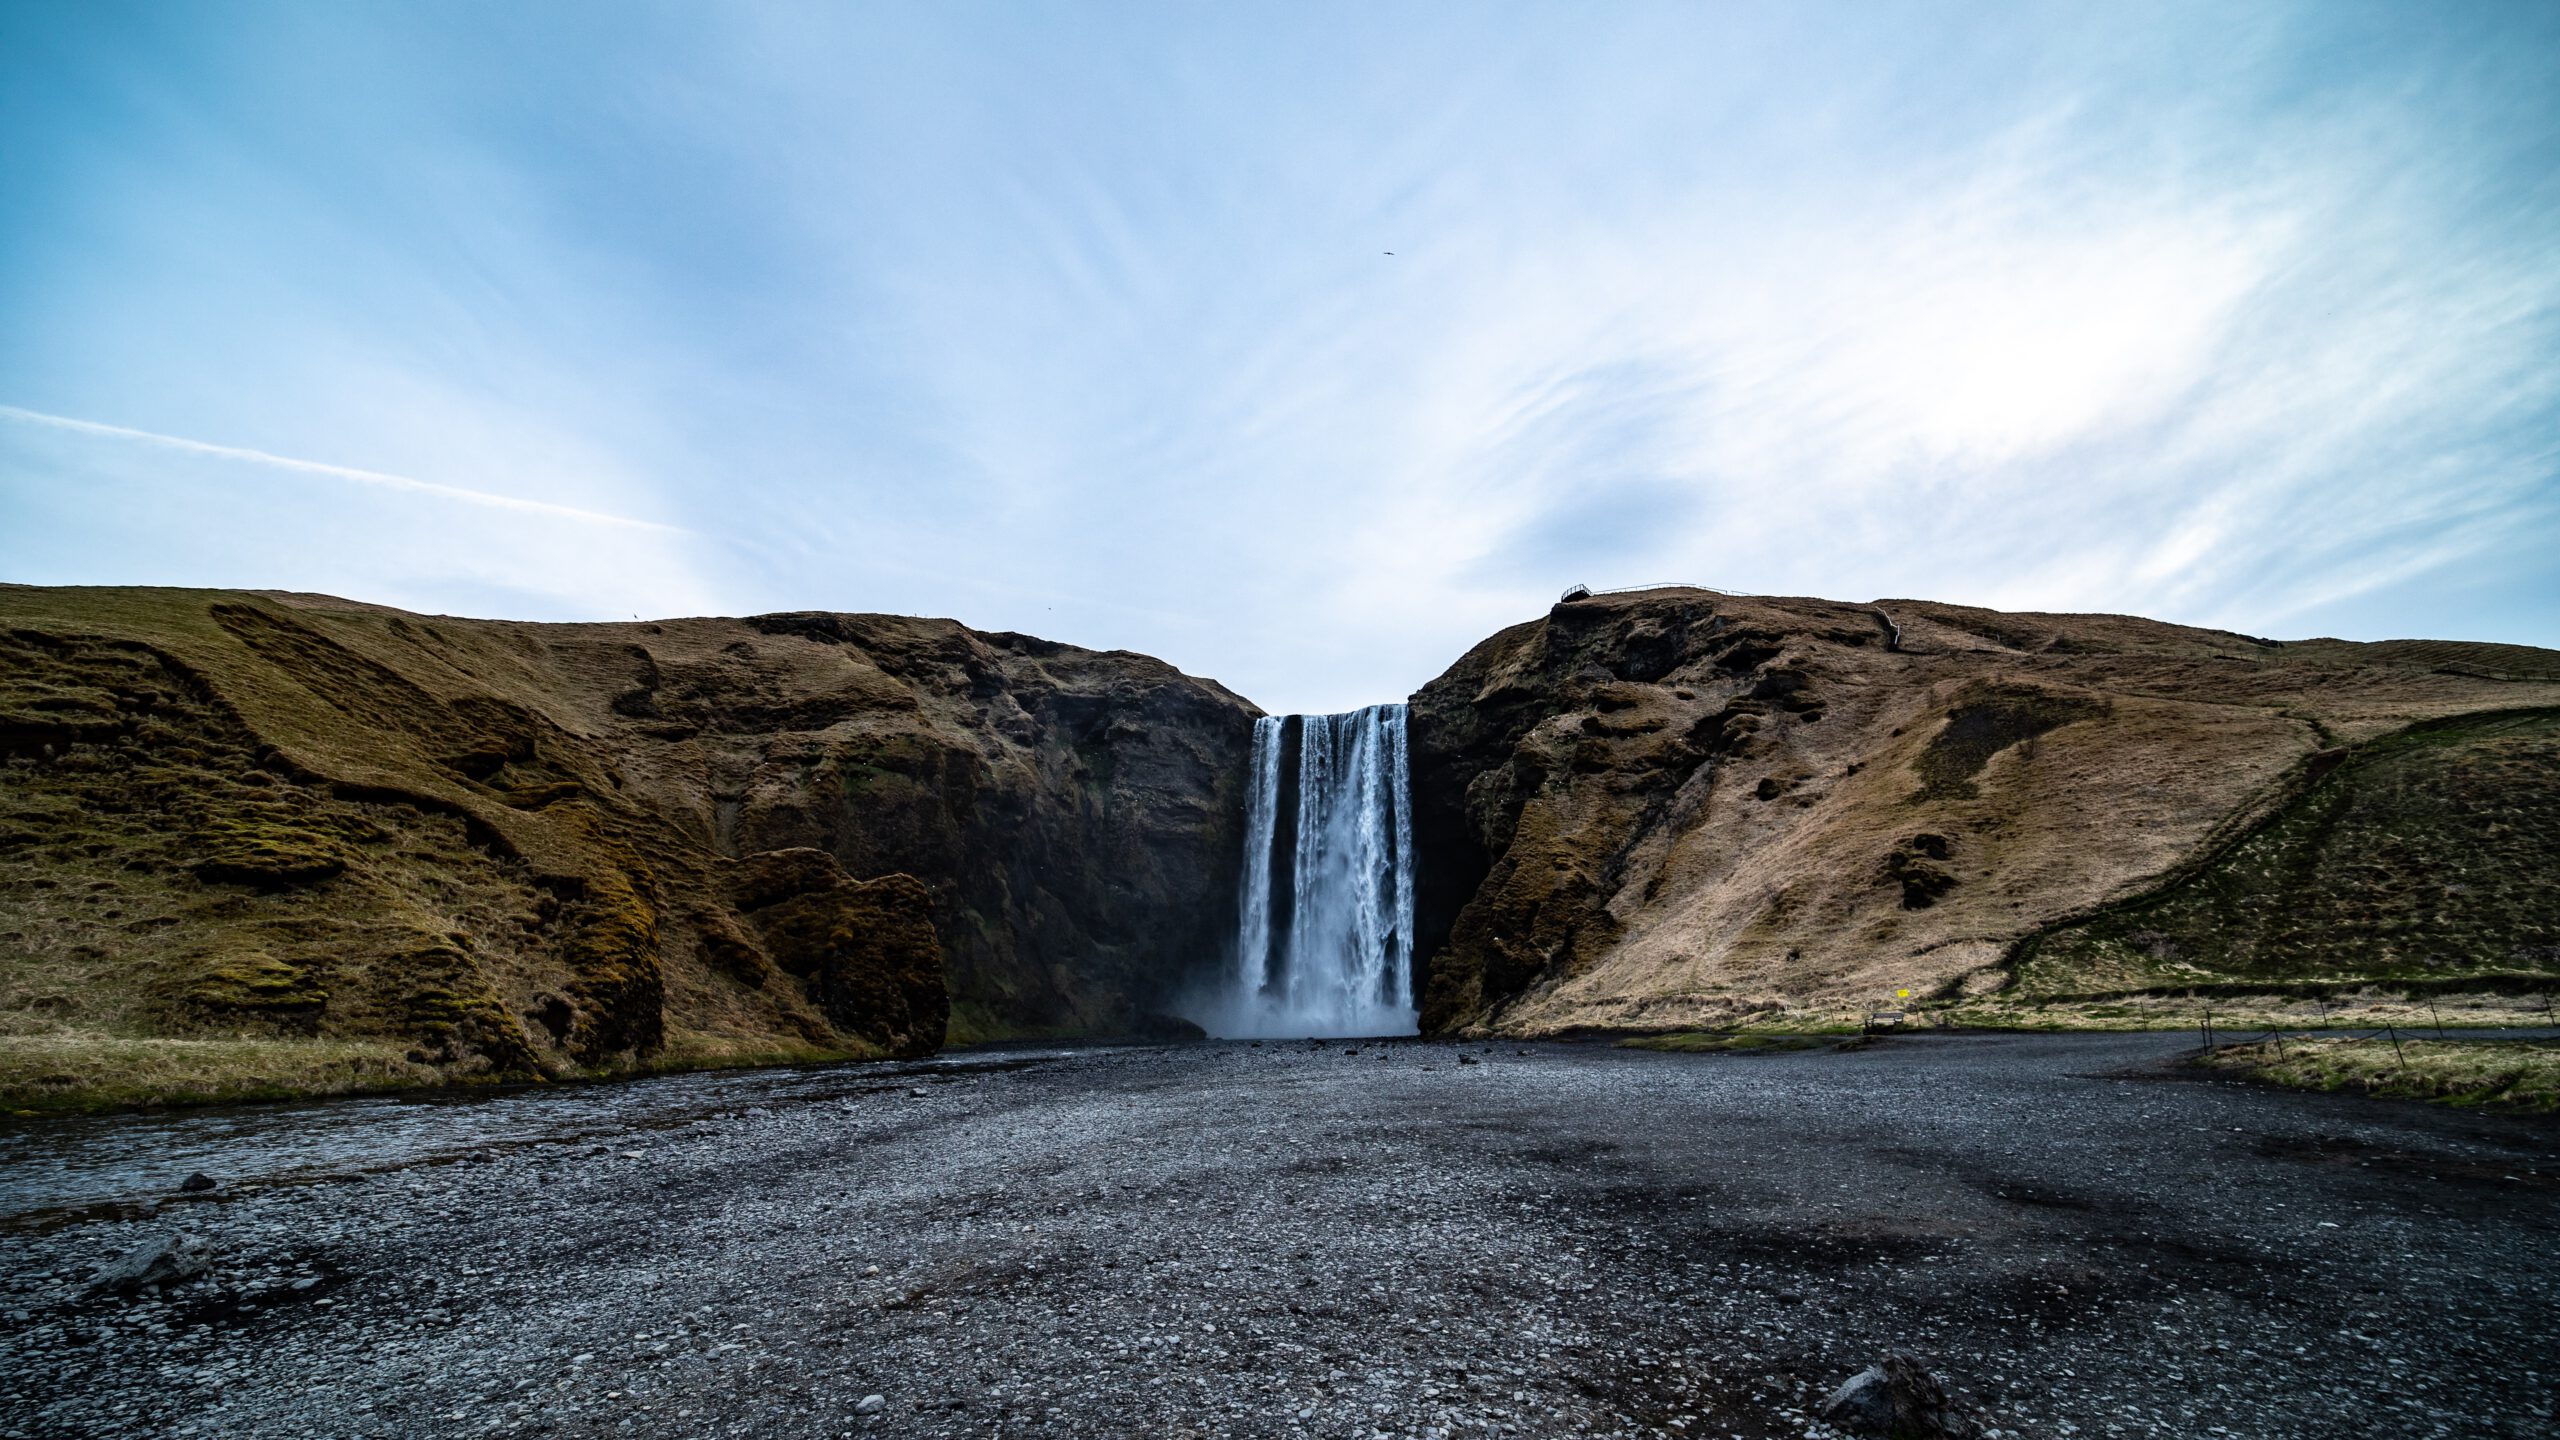 Skogafoss, Iceland - Photo by Kirill Petropavlov on Unsplash